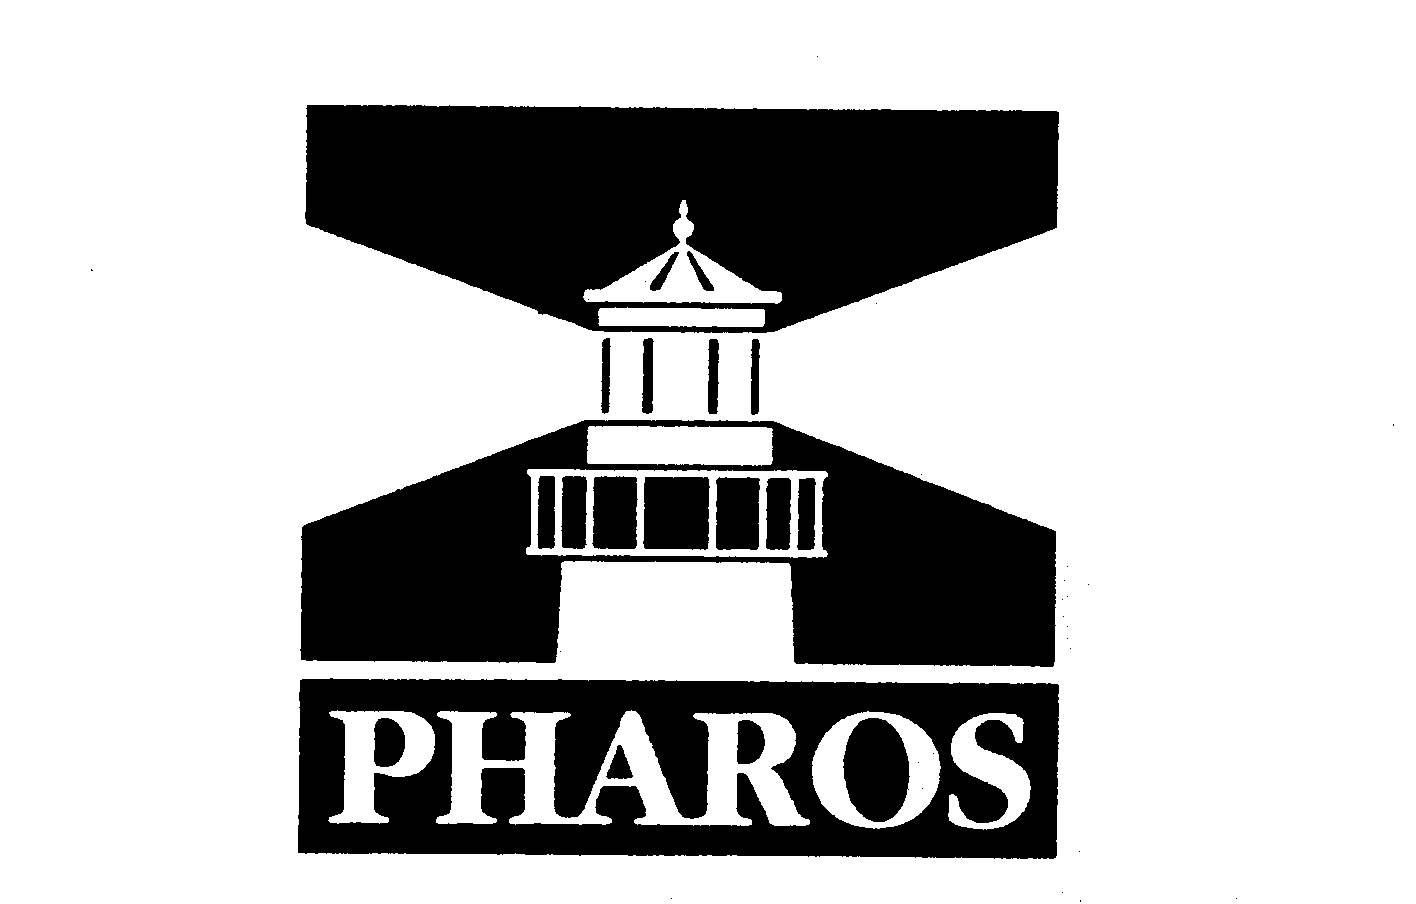 PHAROS